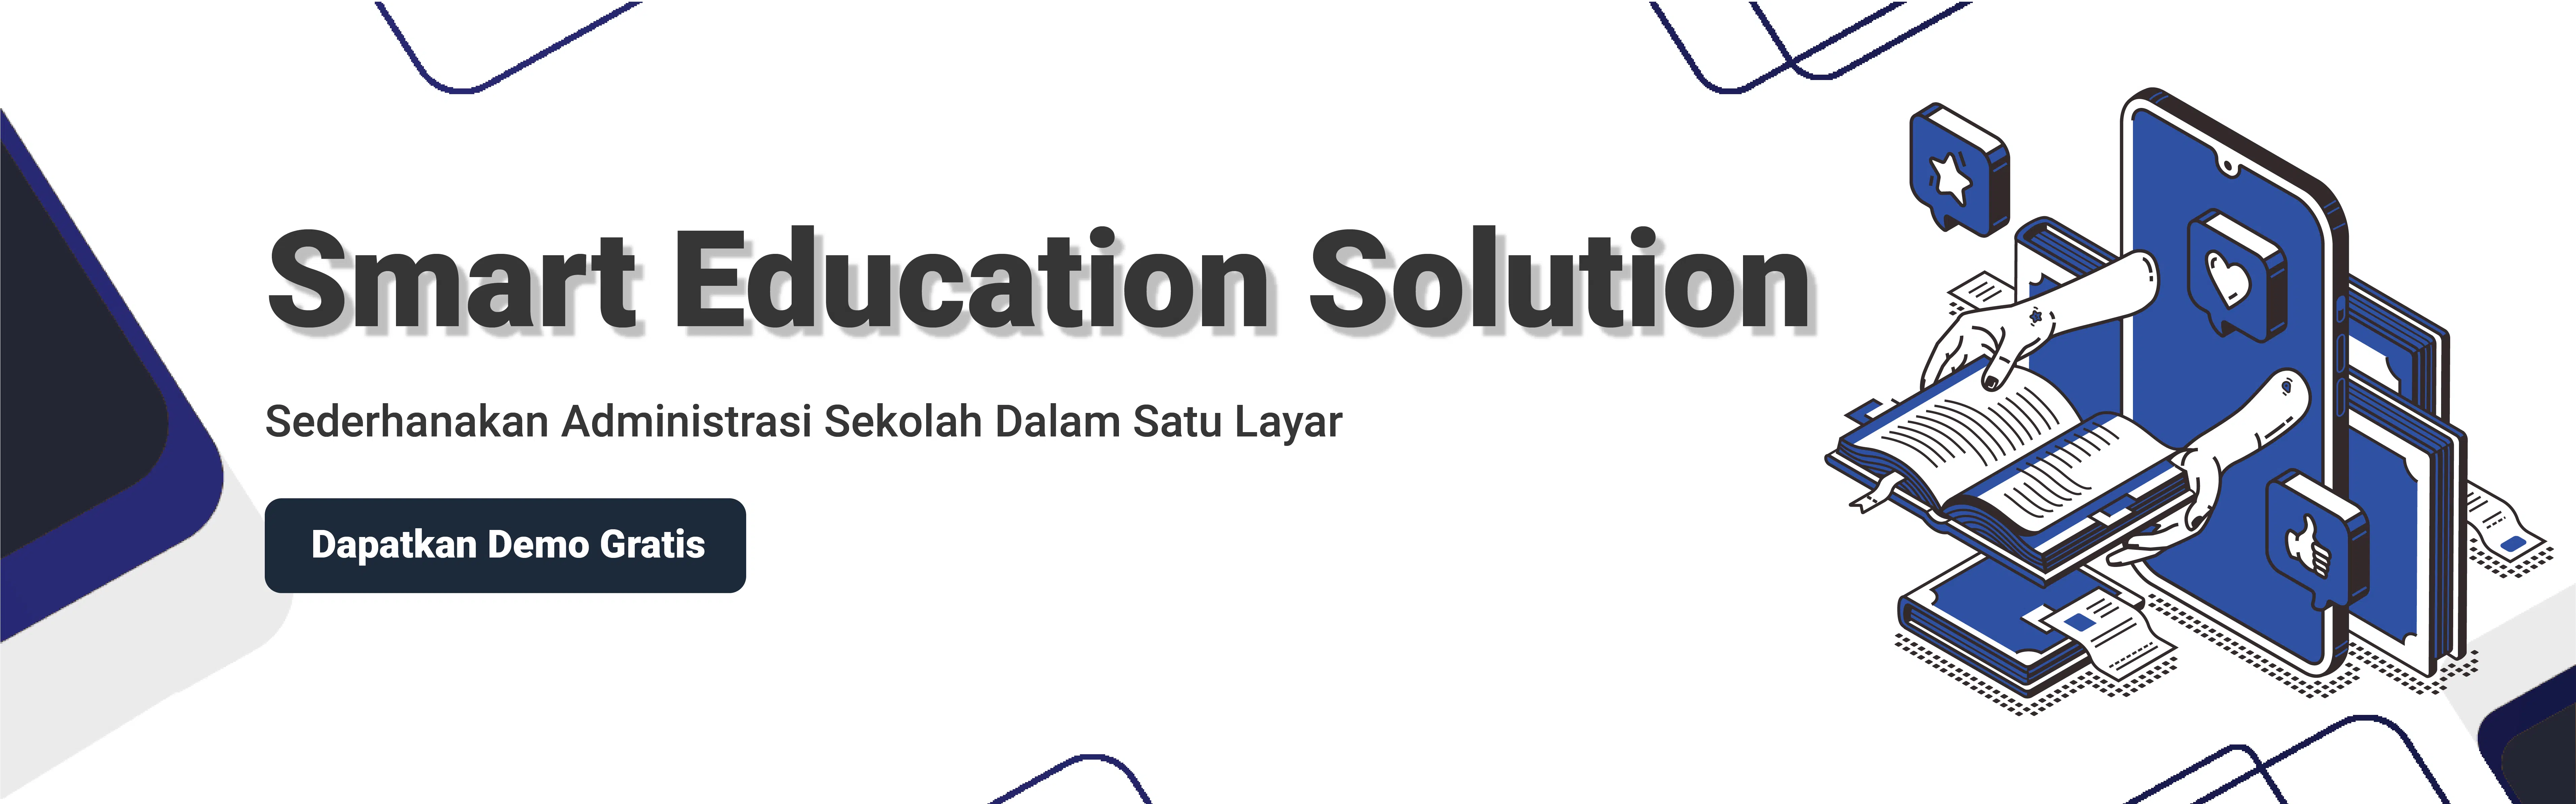 SmartEducationSolution